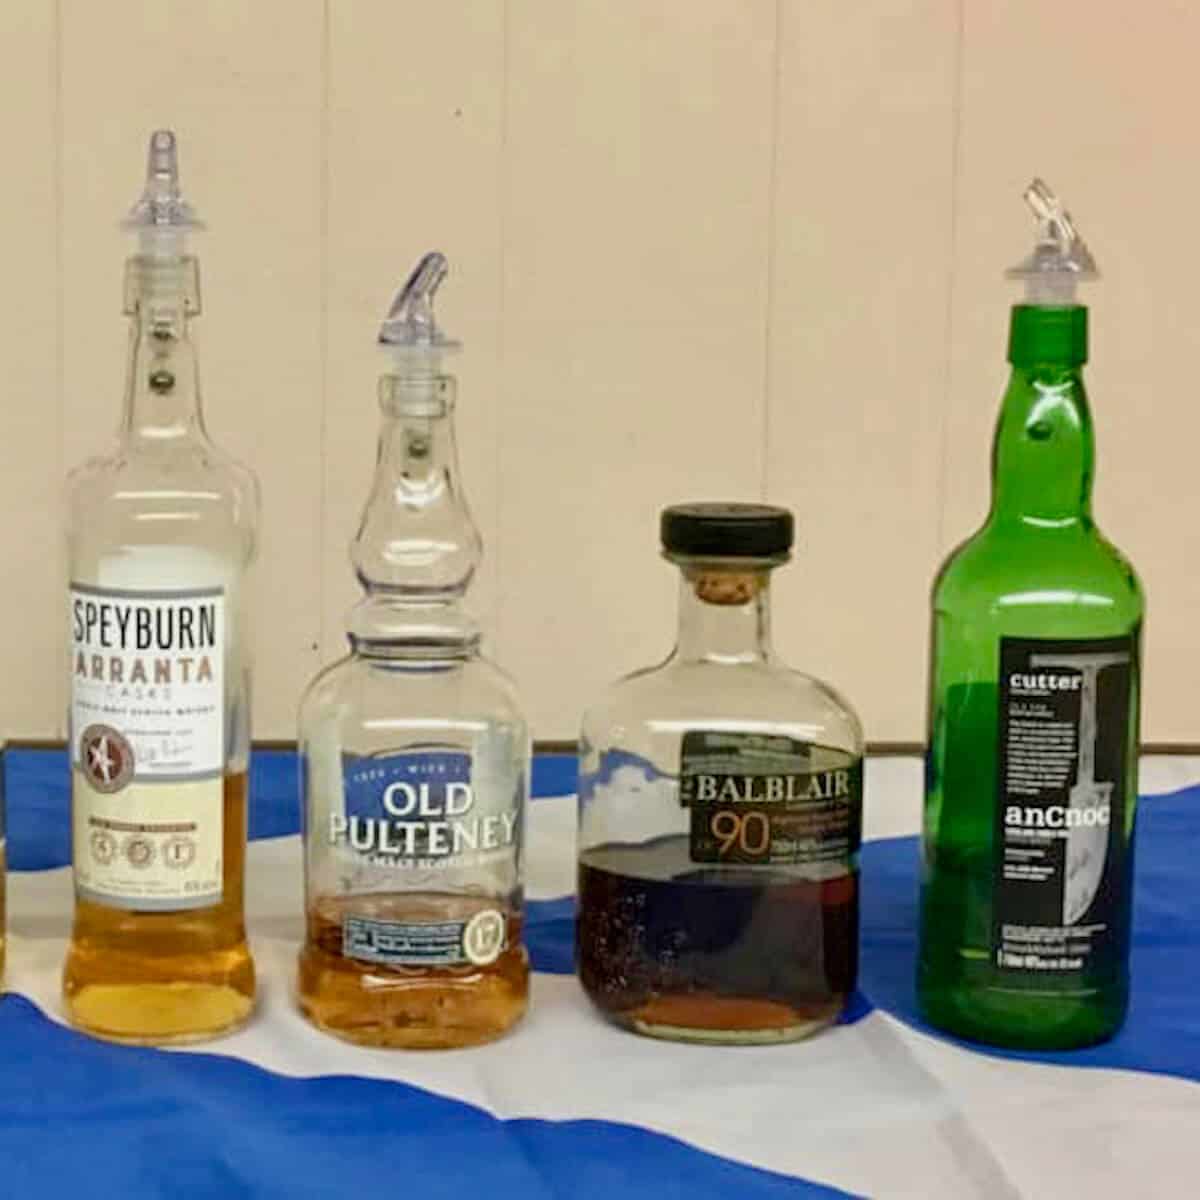 375 Park Ave Spirits Single Malt Scotch Tasting partial lineup in bottles on a Scottish flag.